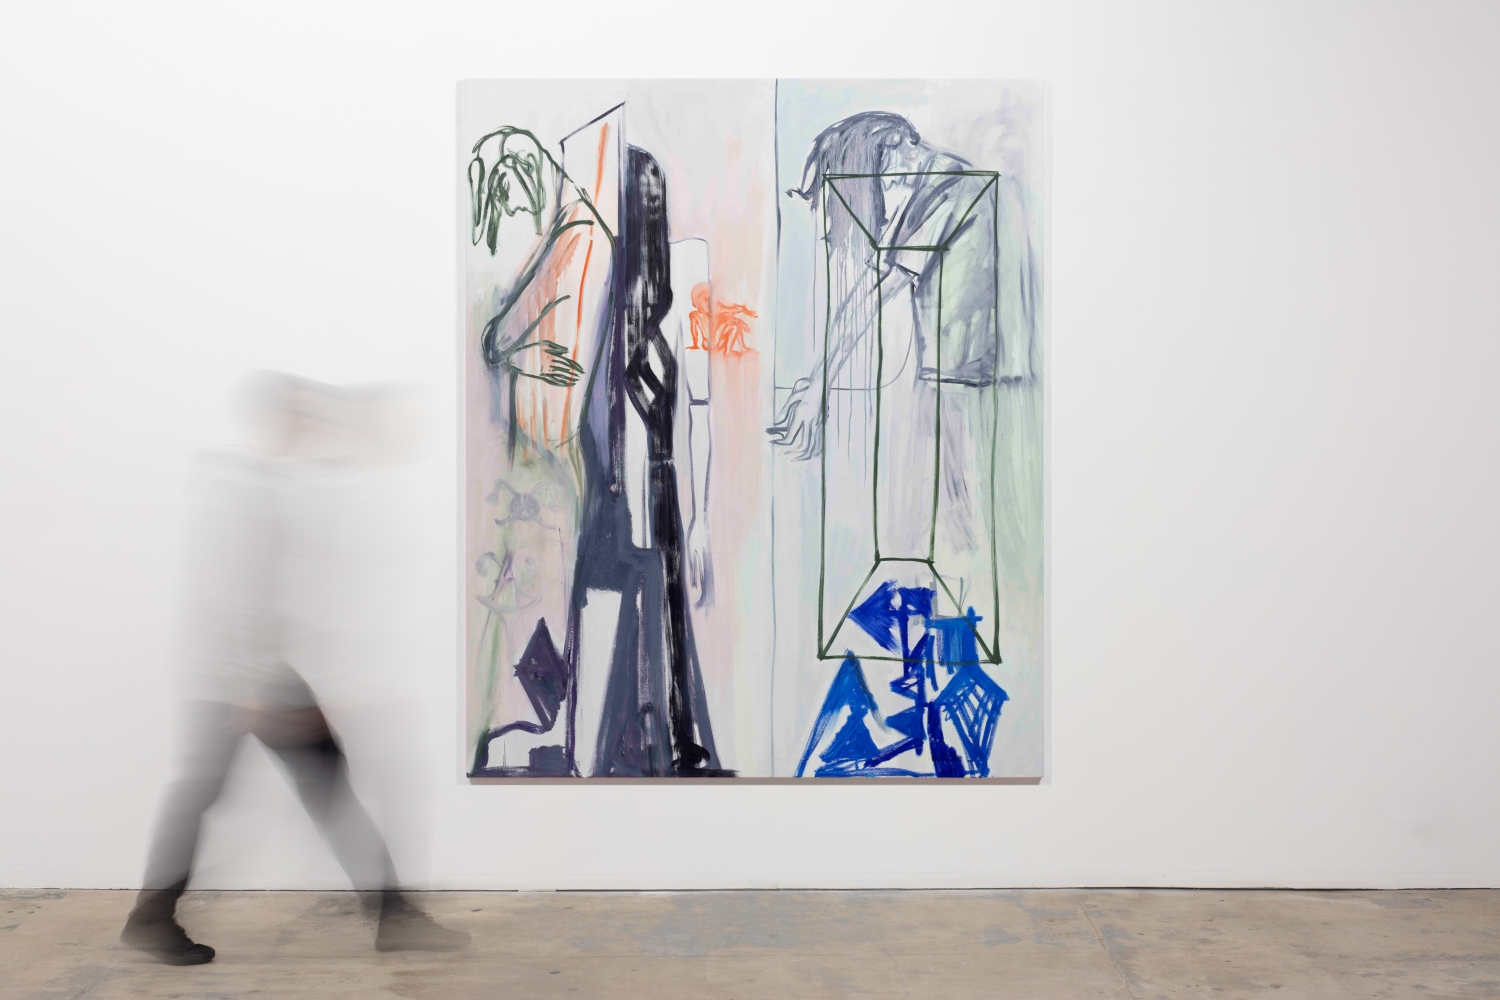 Stefania&amp;nbsp;Batoeva
Untitled, 2021
oil on canvas
90.5 x 74.8 in
230 x 190 x 3.6 cm